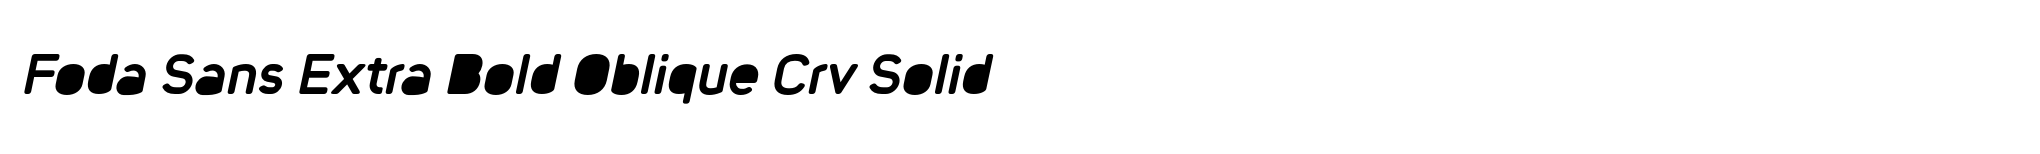 Foda Sans Extra Bold Oblique Crv Solid image